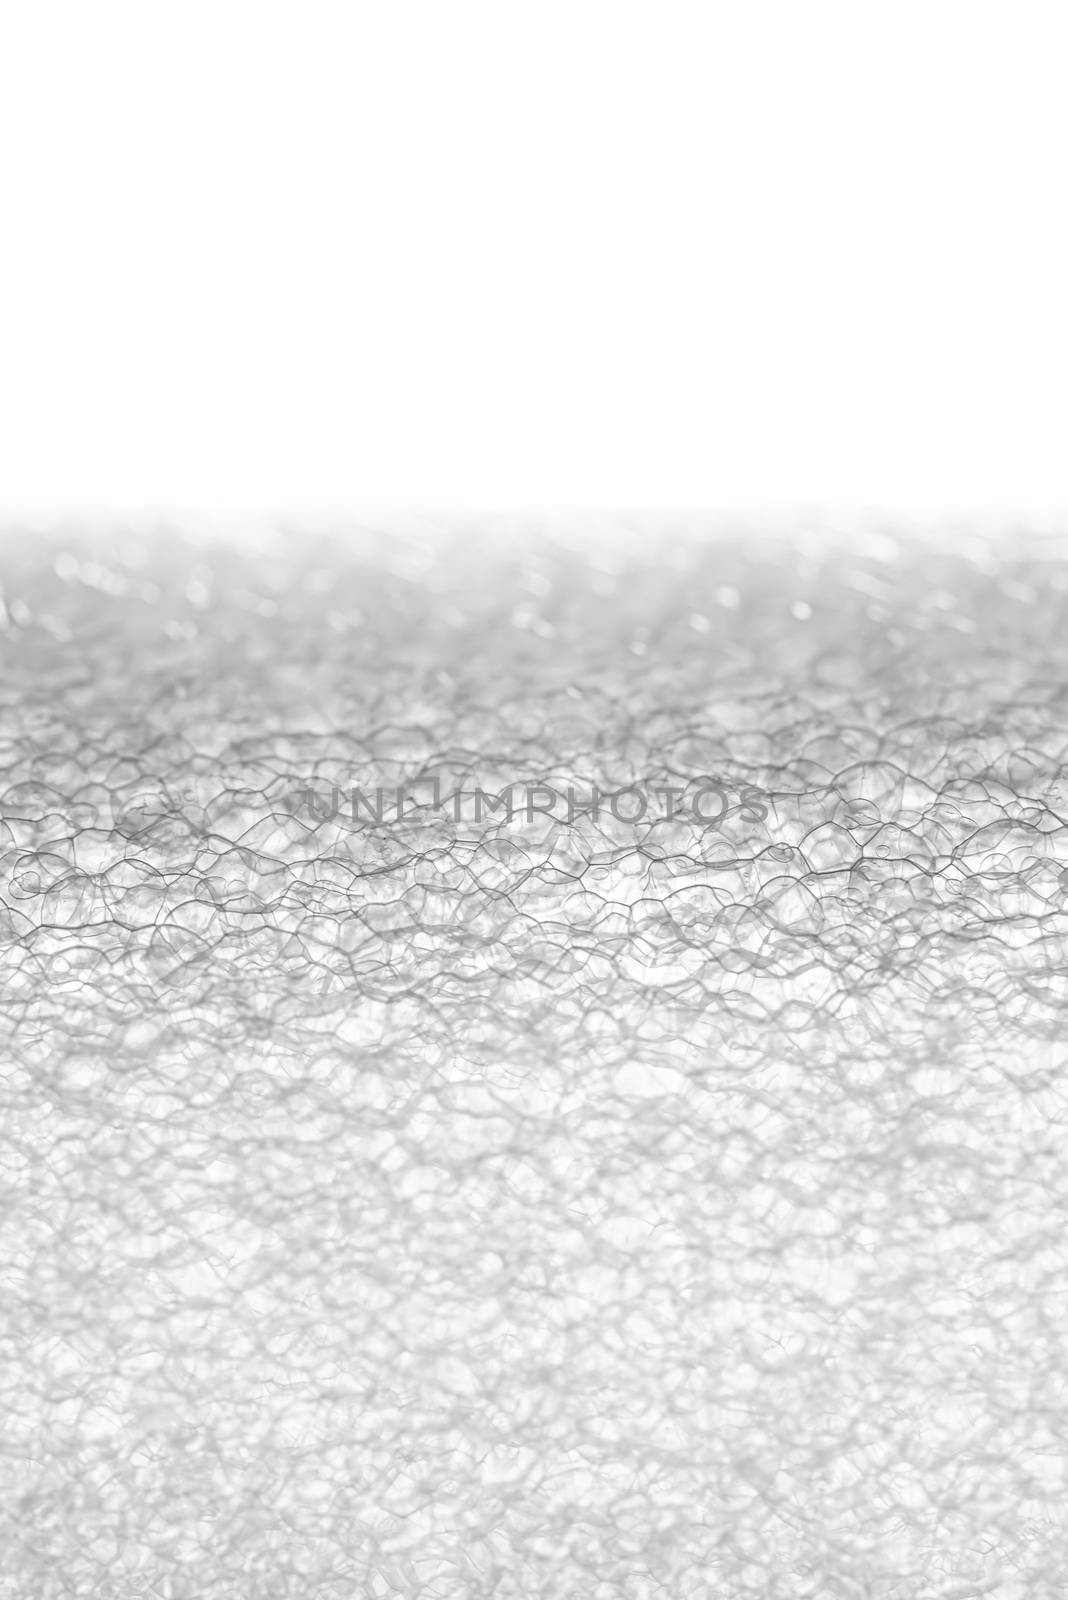 A white extruded polyethylene foam tube texture isolated on white background